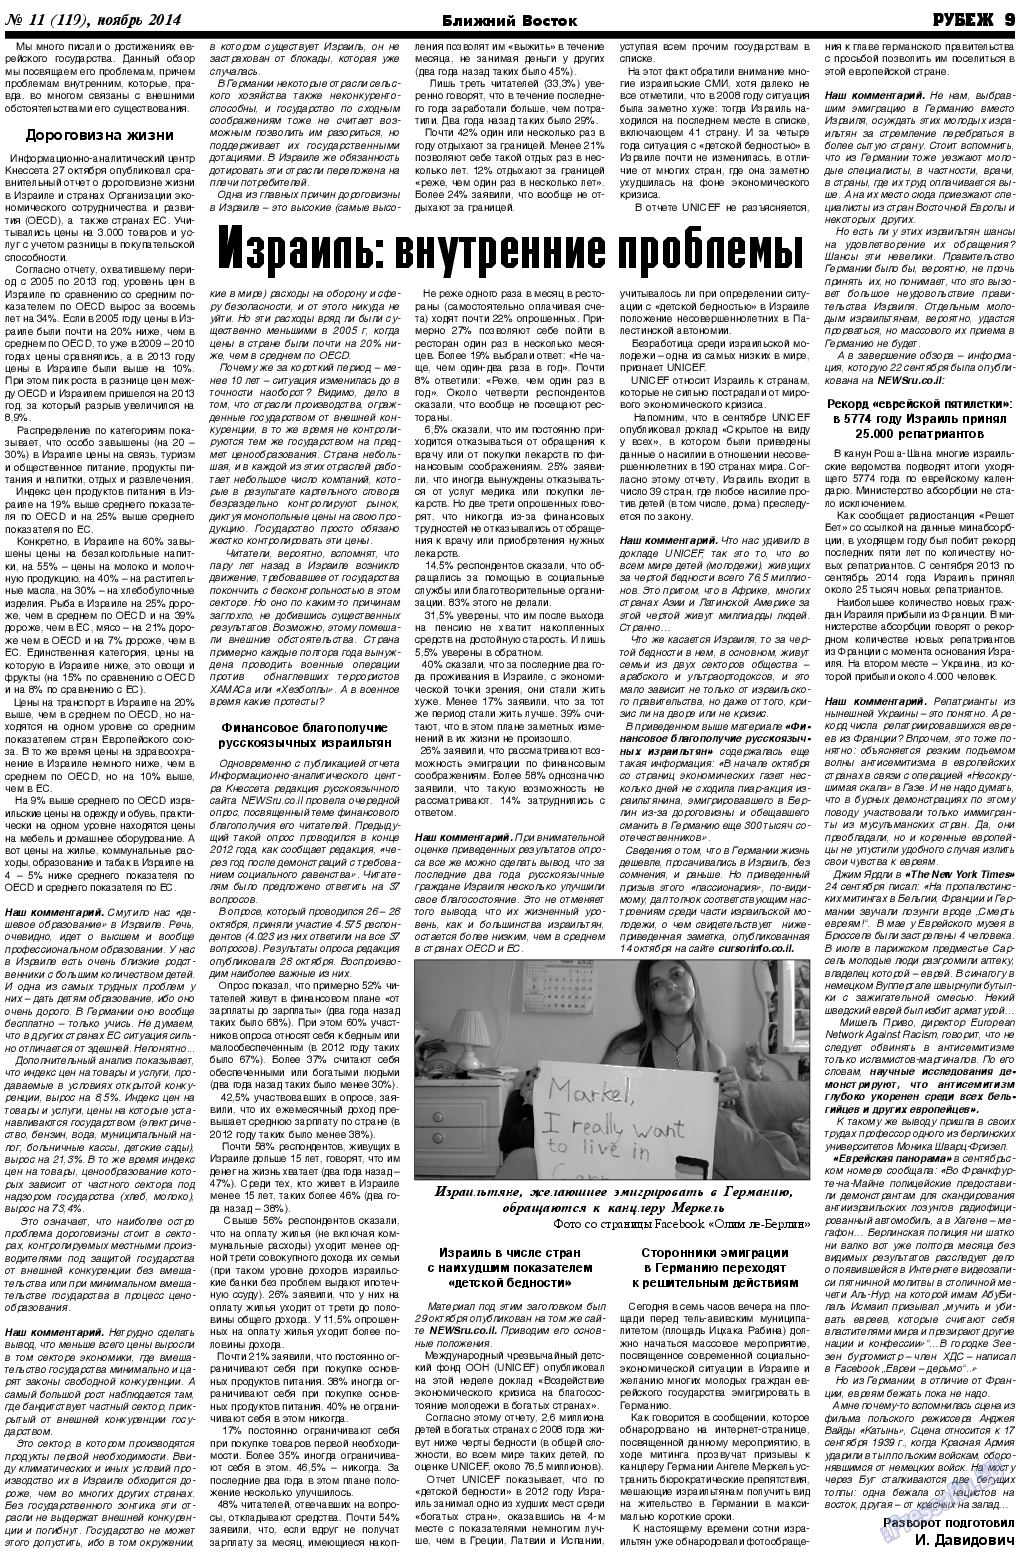 Рубеж, газета. 2014 №11 стр.9